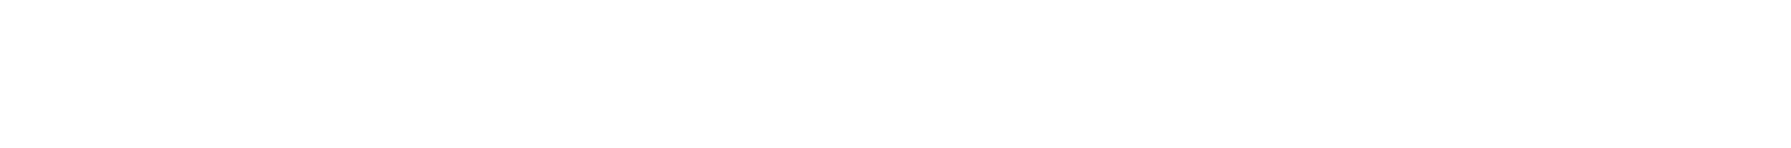 Marsh & McLennan Companies Inc logo